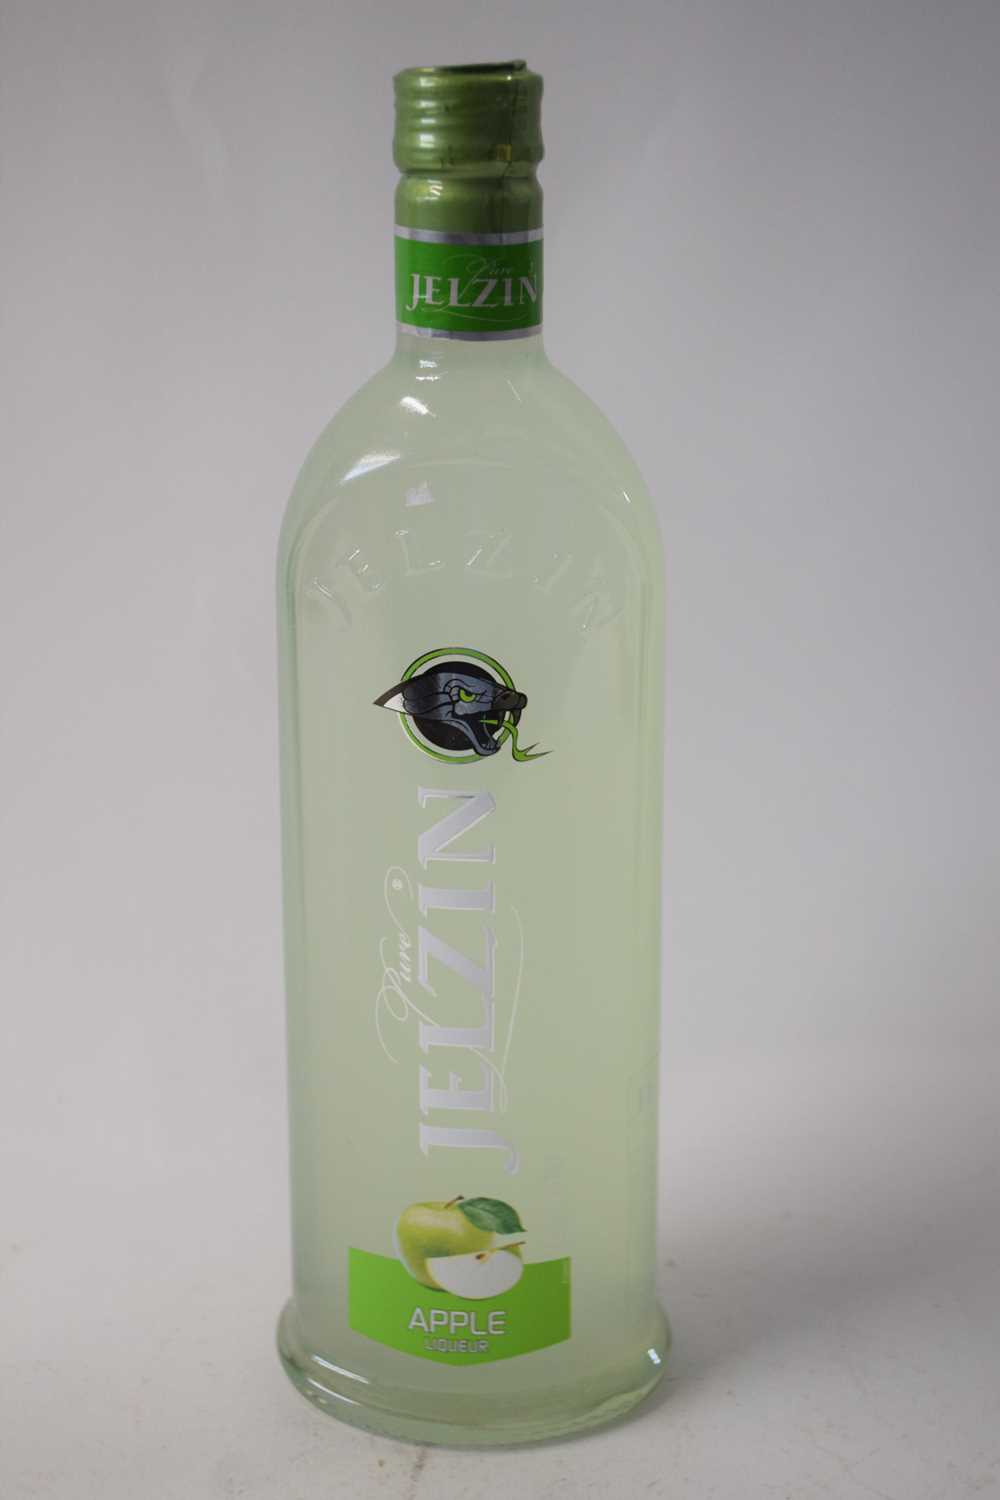 Jelzin Liqueur Apple, 1 bottle